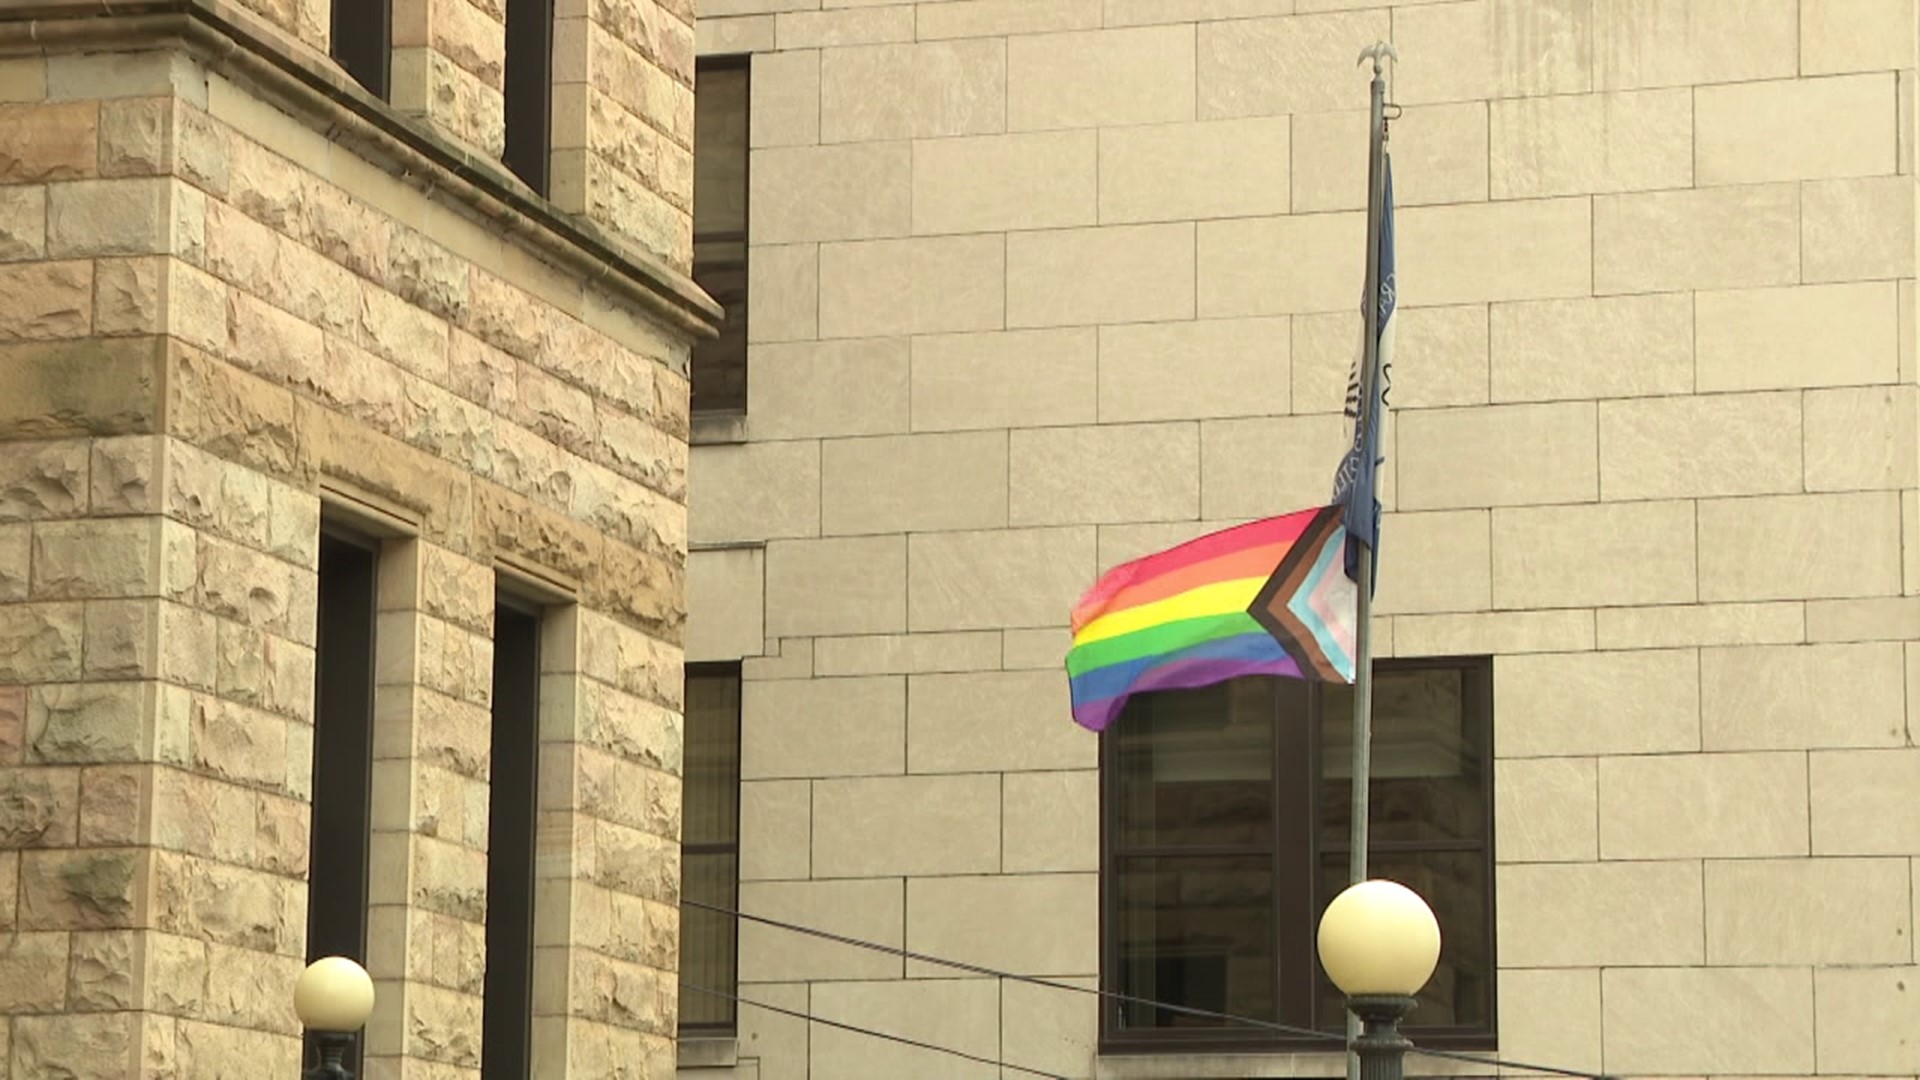 In honor of pride month, Scranton held its annual pride flag raising Saturday morning at city hall.